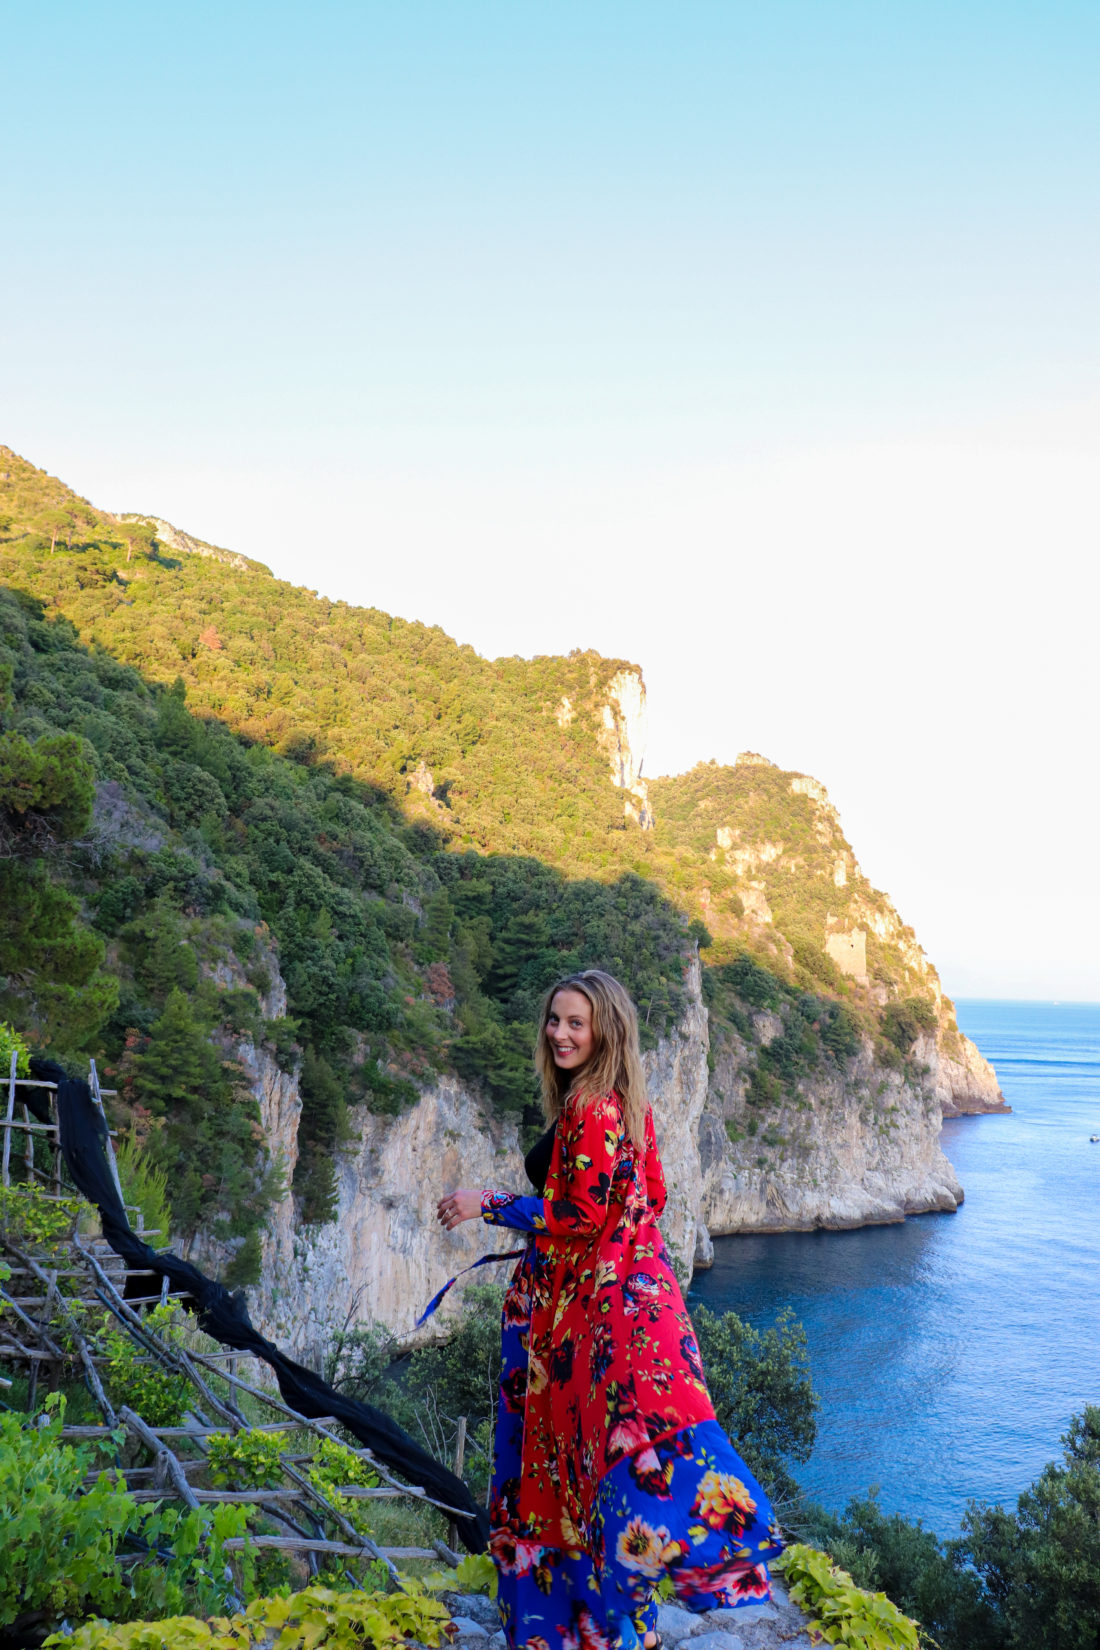 Eva Amurri Martino wears a colorful dress on the cliffs of Amalfi